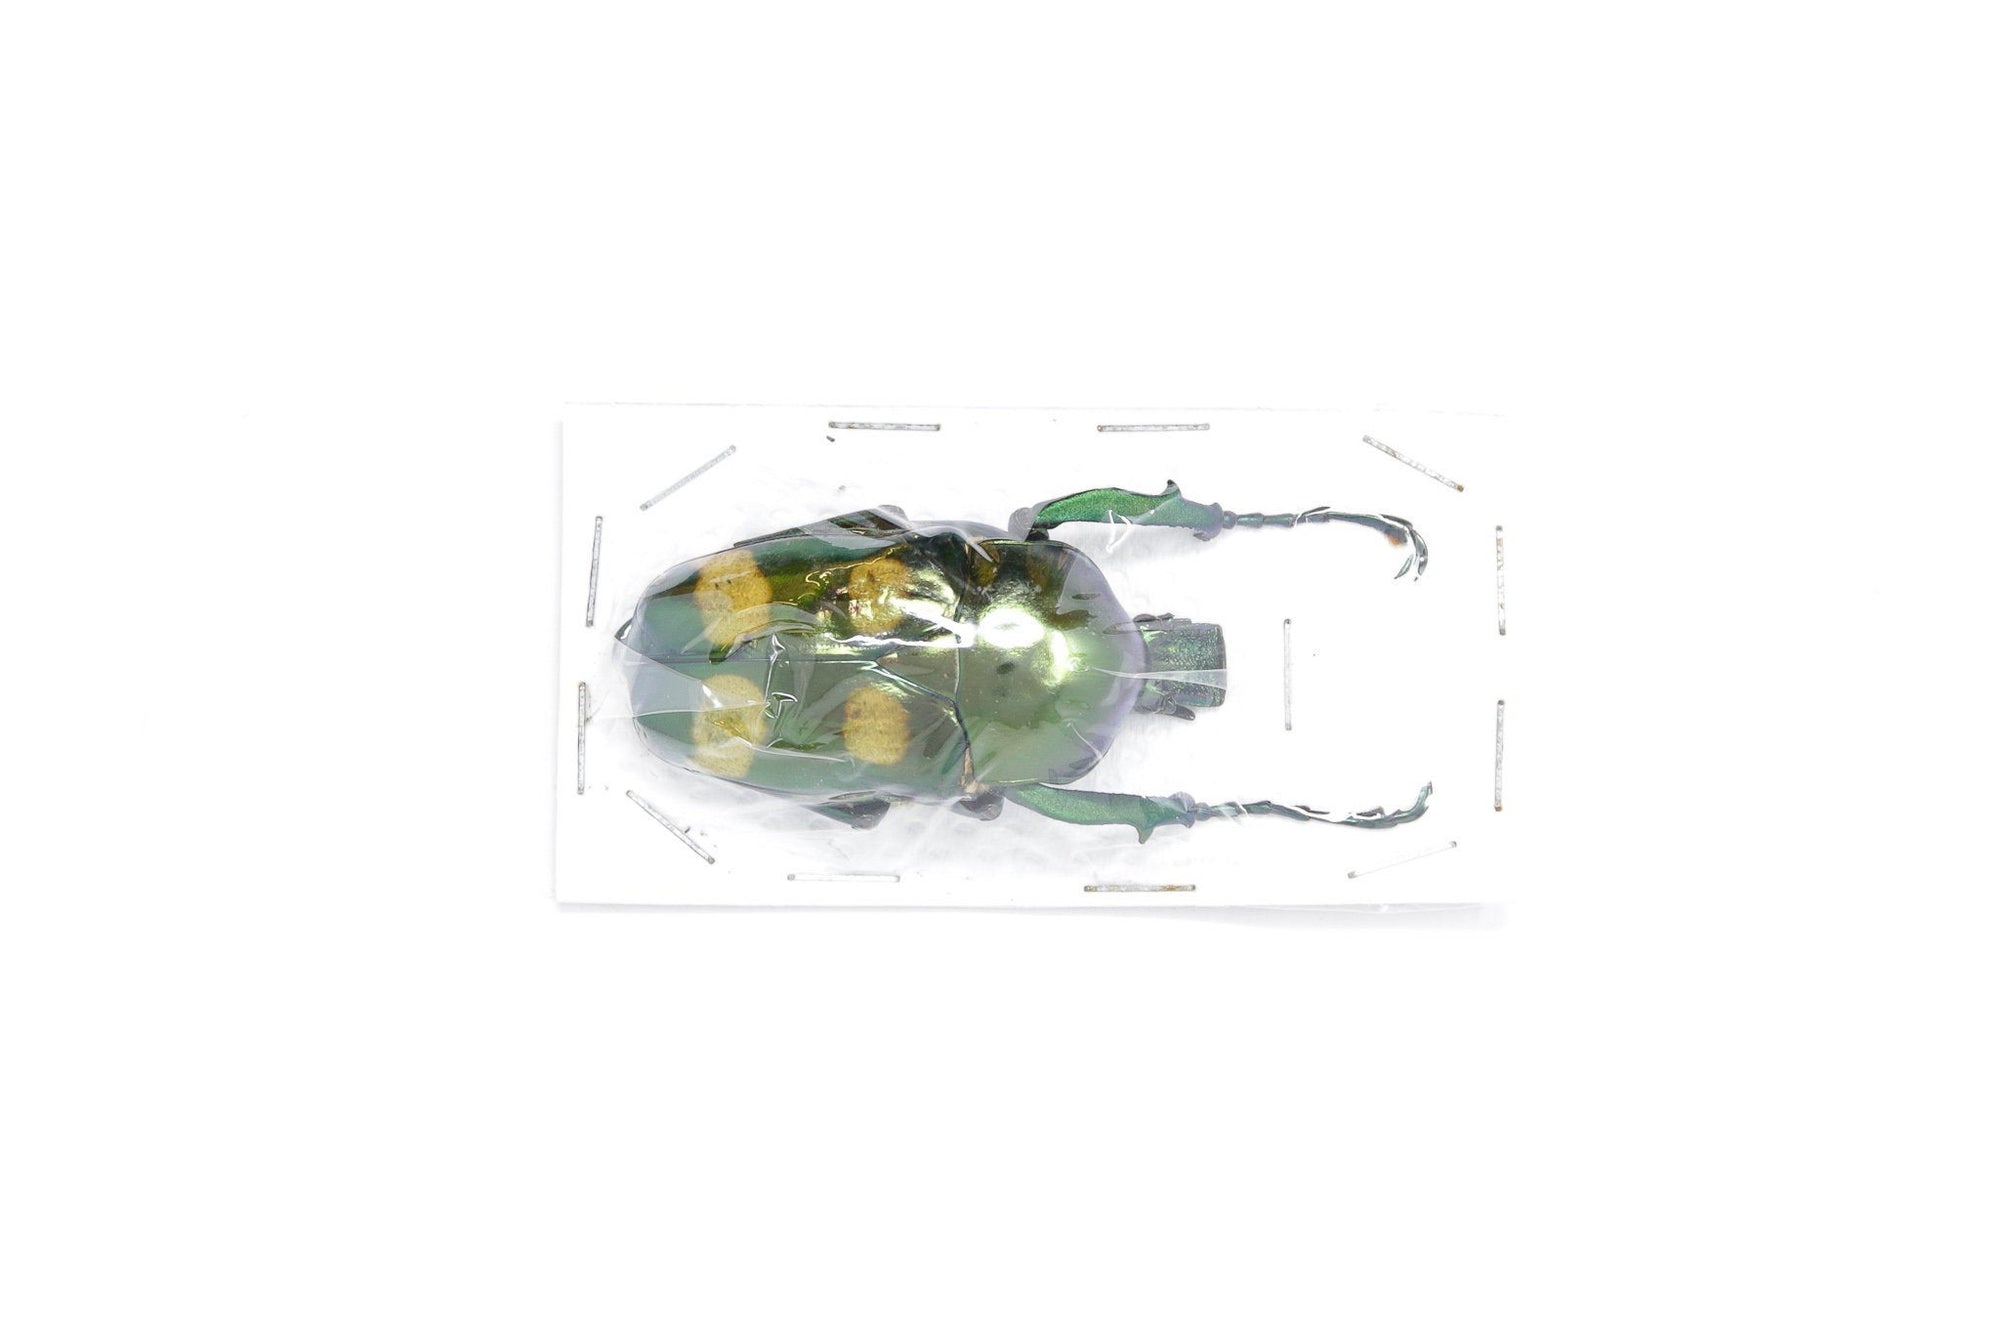 Jumnos ruckeri ruckeri 50.5mm A1 | Thailand Flower Beetle, Entomology Specimen